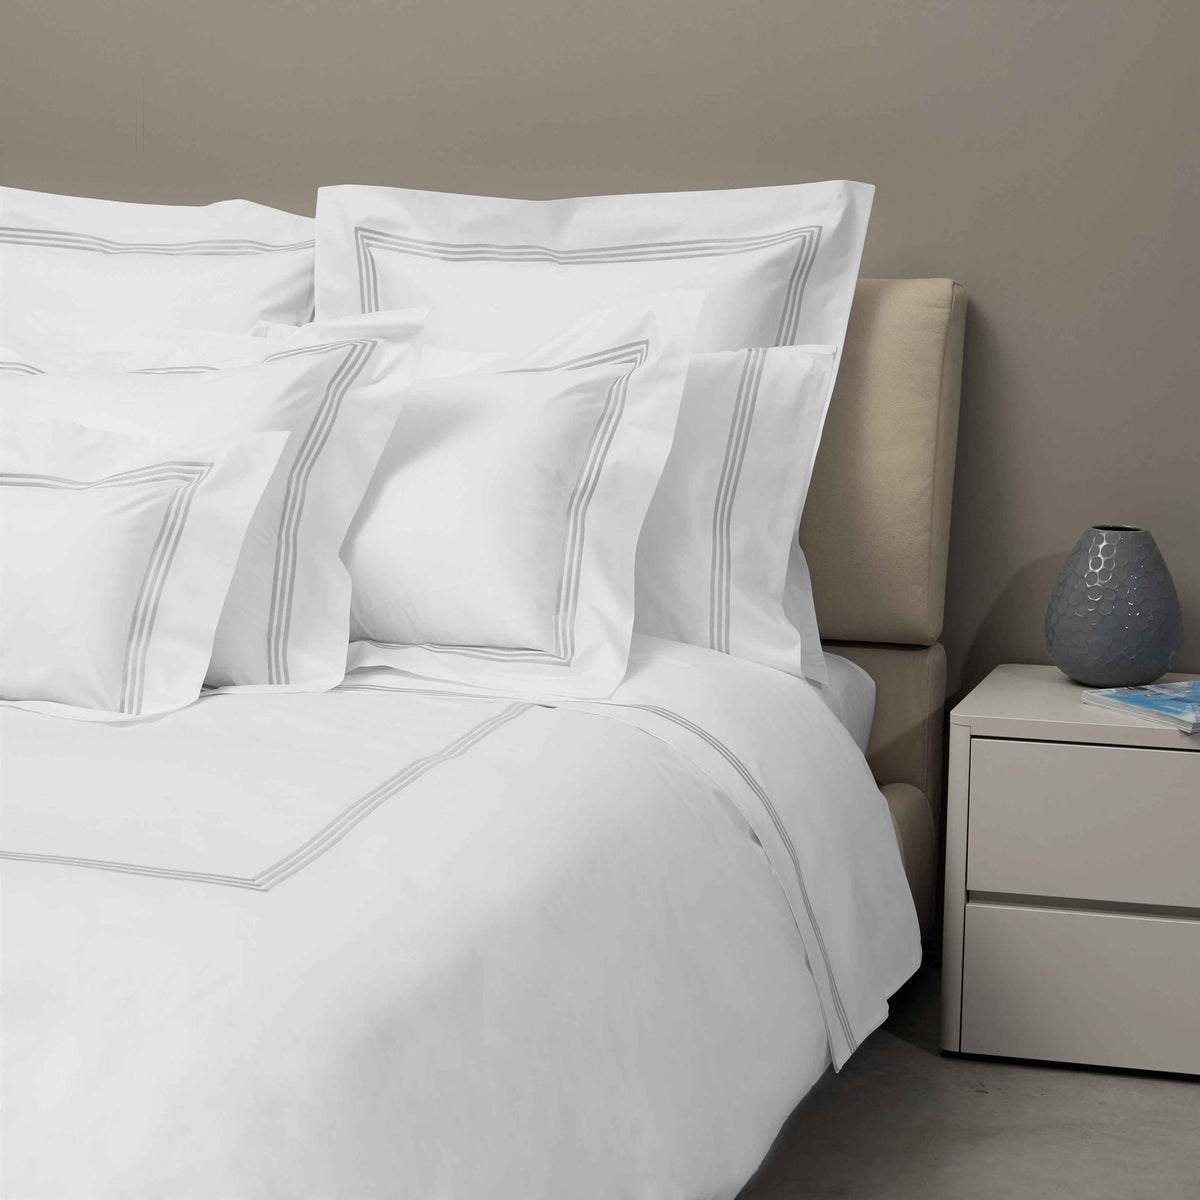 Bed Dressed in Signoria Platinum Percale Bedding in White/Pearl Color